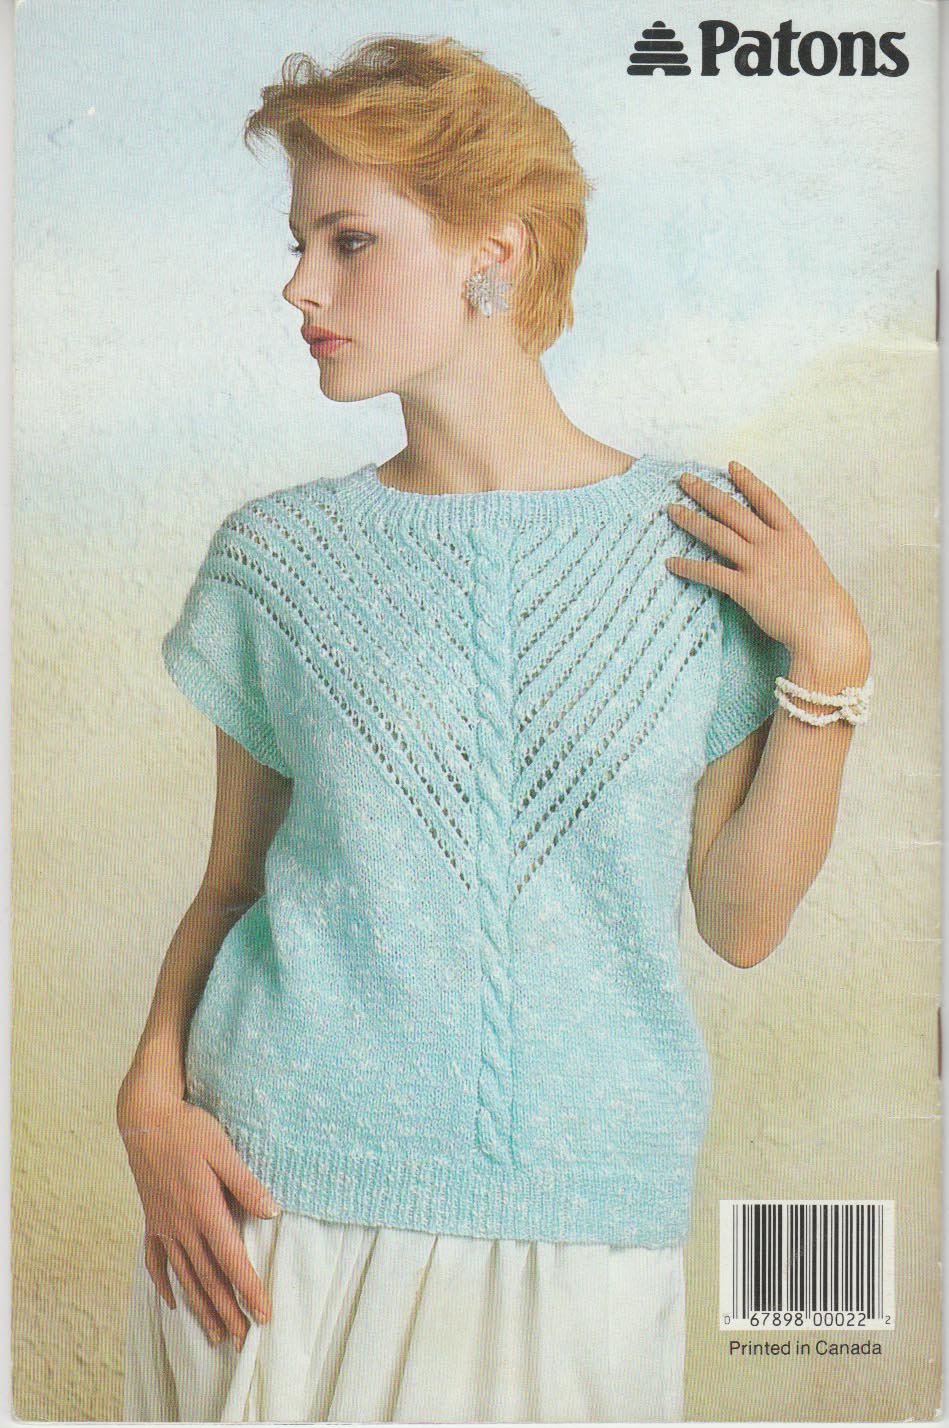 Patons 1987 Knitting Pattern Booklet #492 Springtime